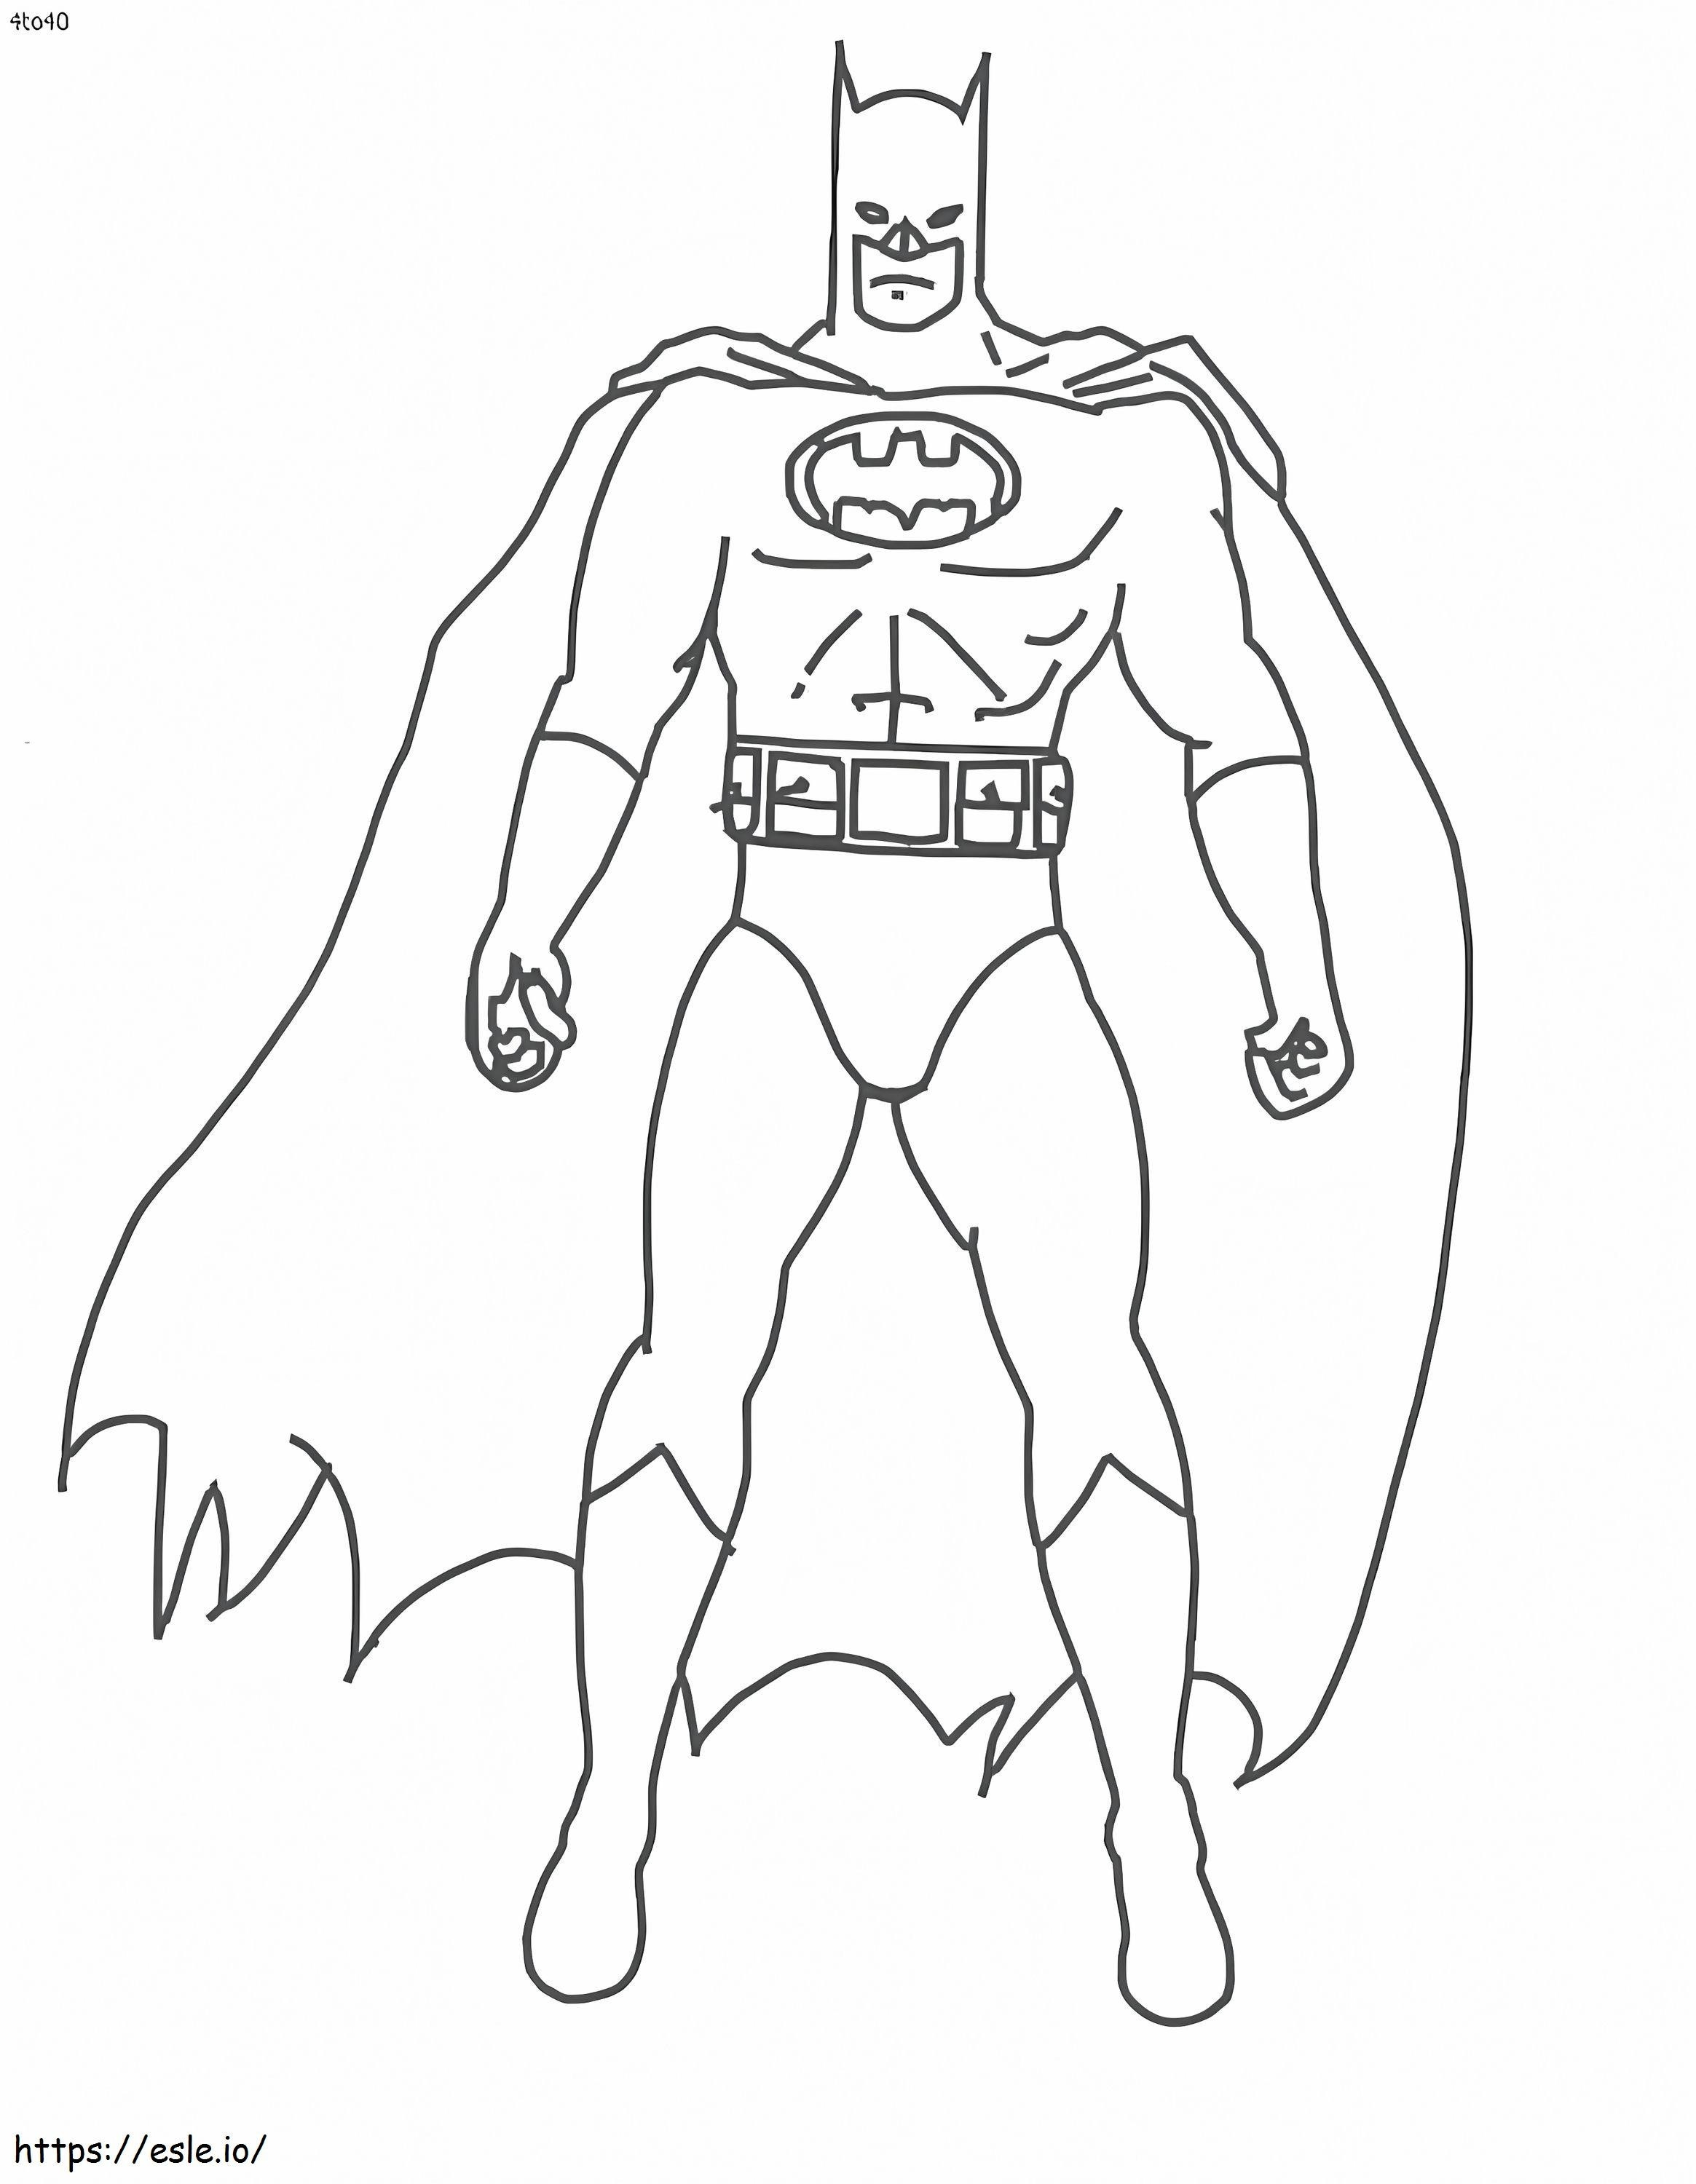 Basic Batman coloring page